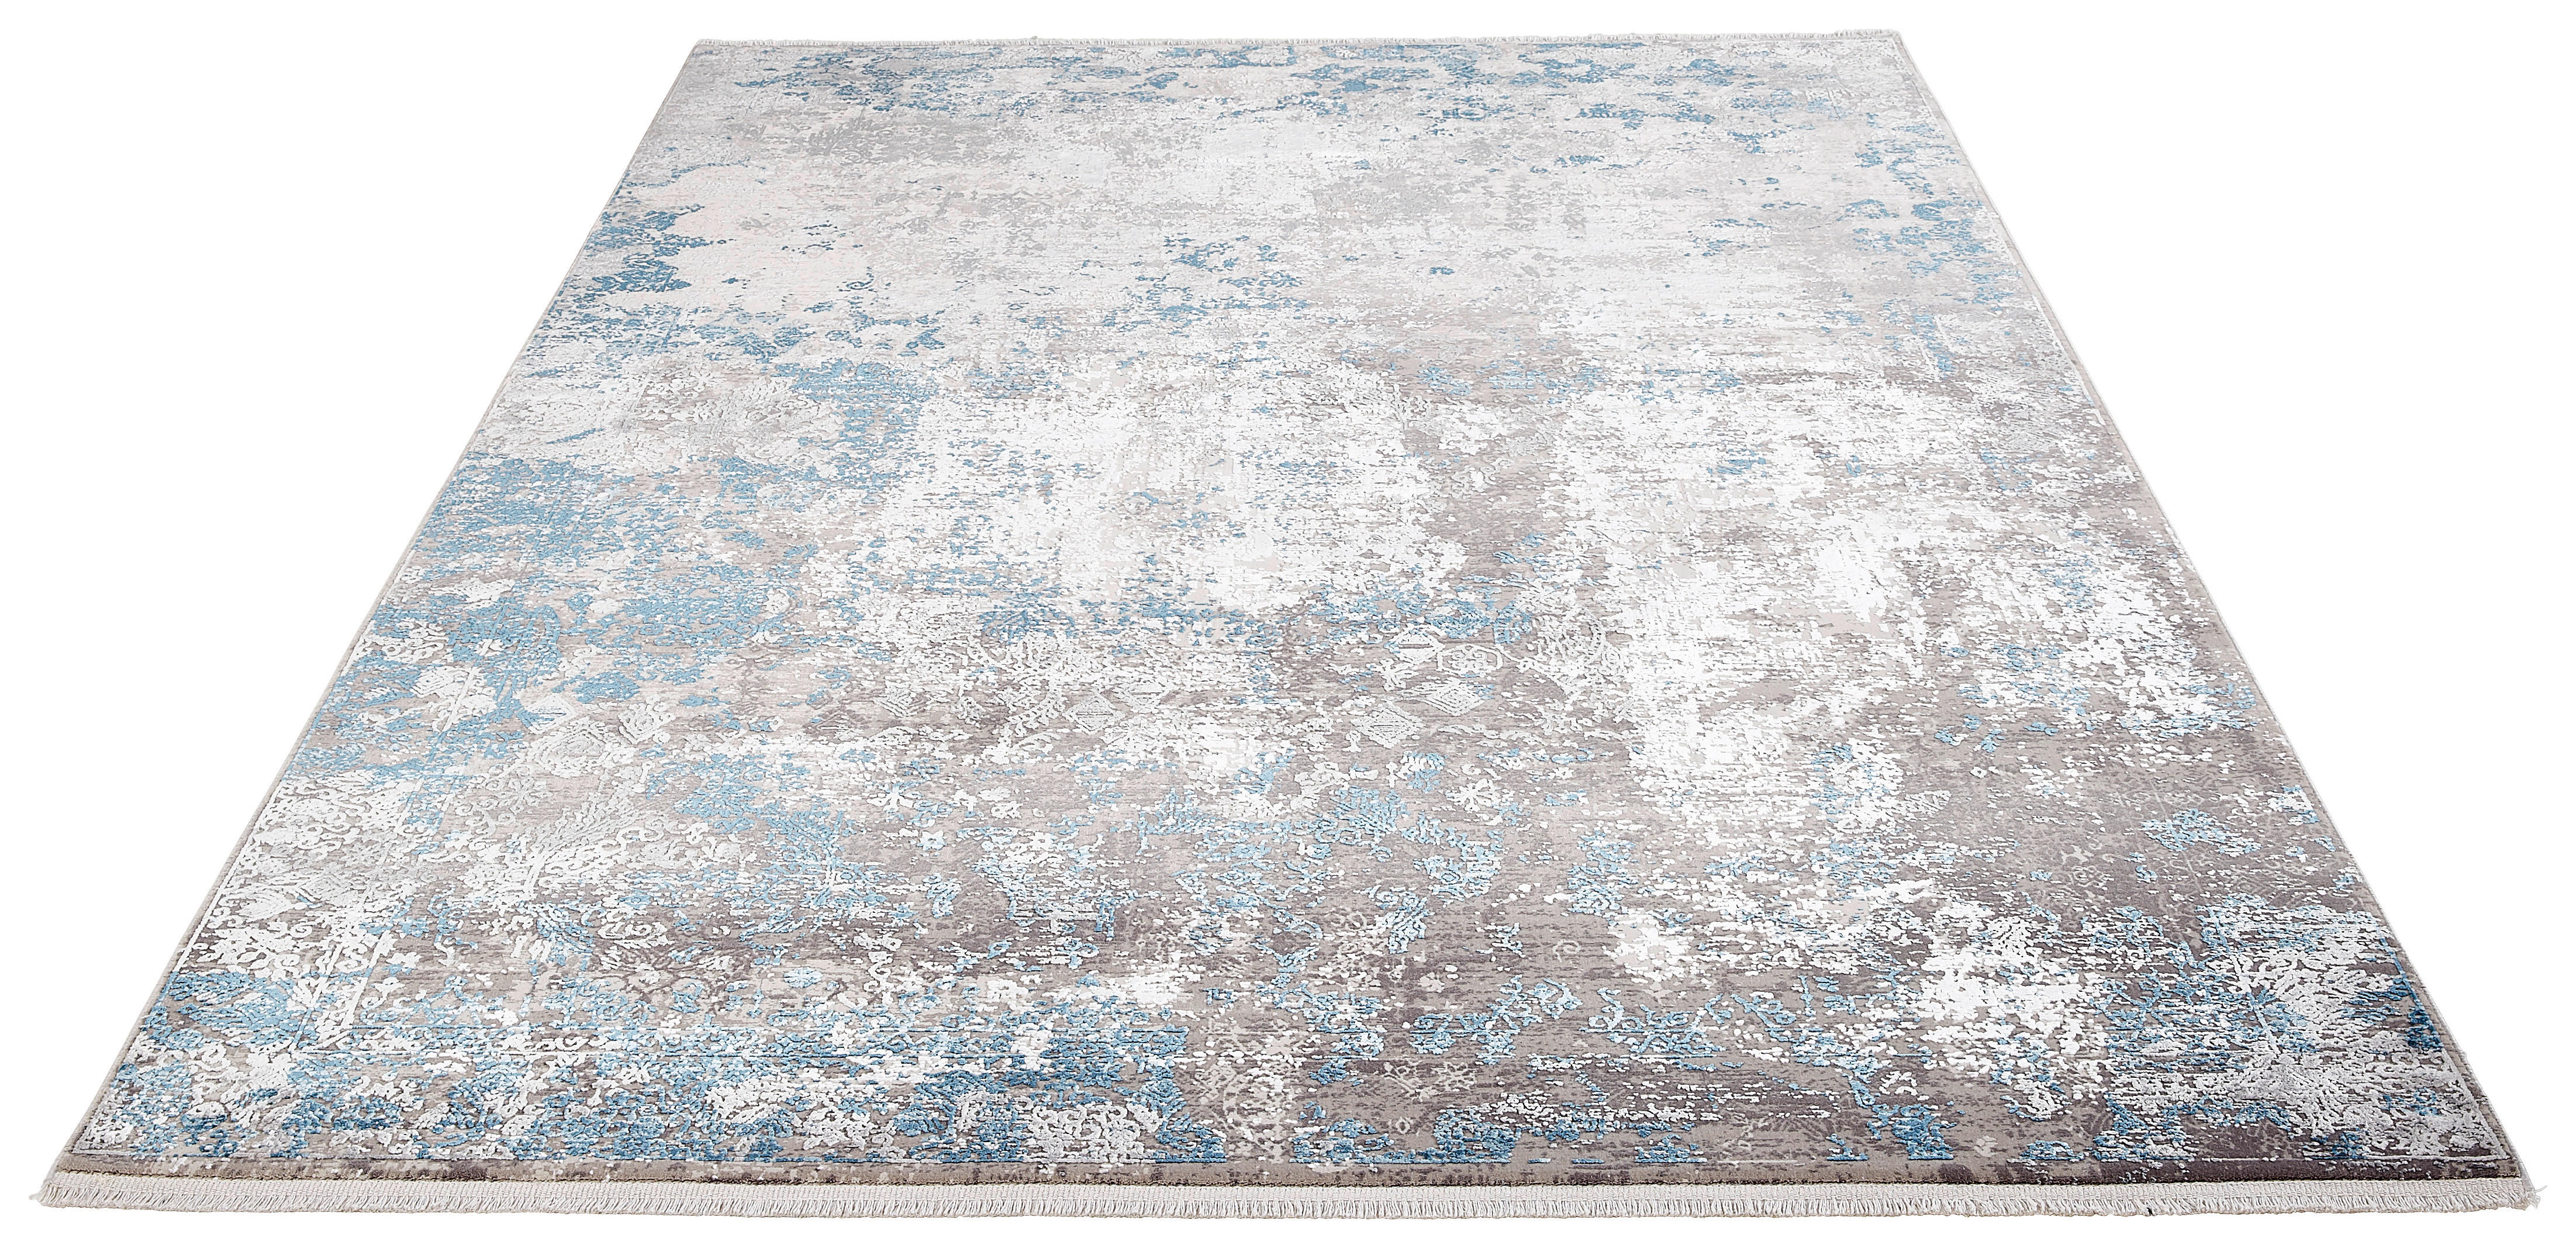 VINTAGE-TEPPICH  80/150 cm  Blau   - Blau, Design, Textil (80/150cm) - Dieter Knoll